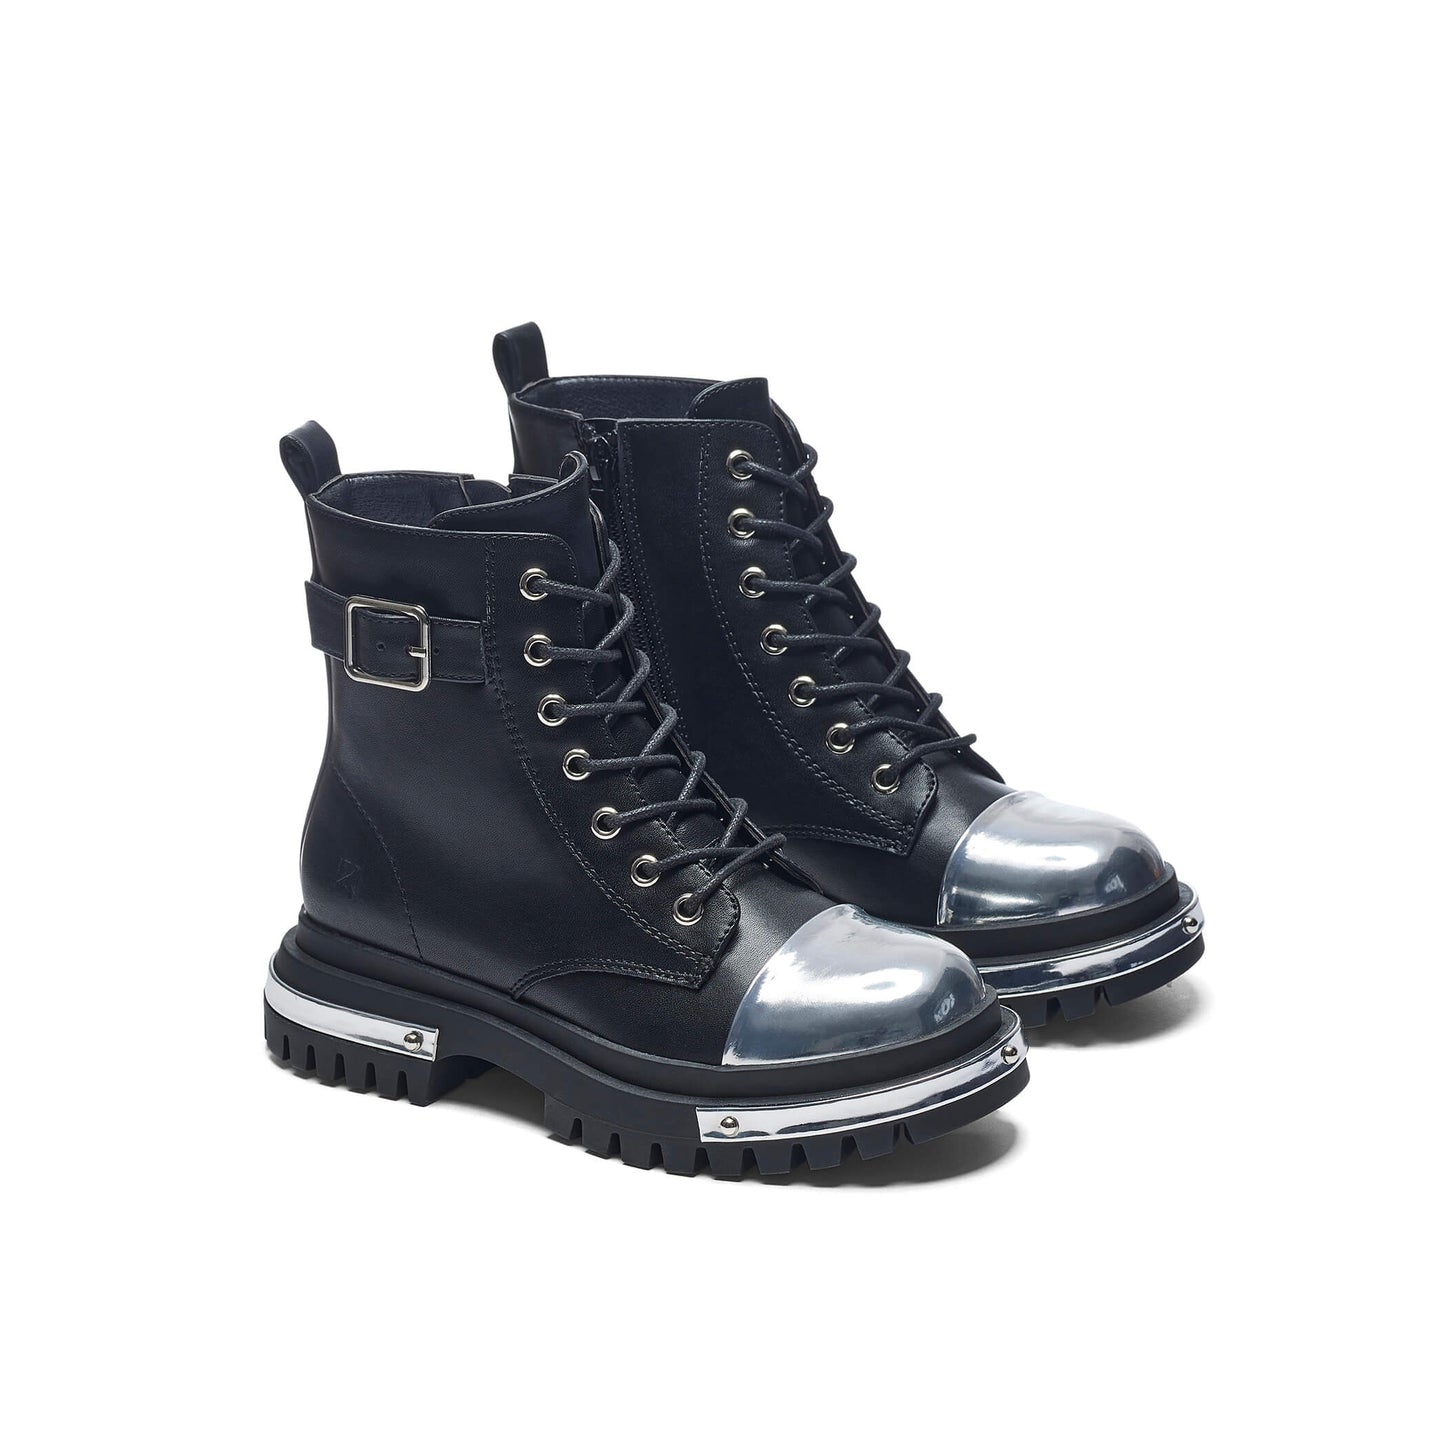 Lil’ Borin Hardware Boots - Ankle Boots - KOI Footwear - Black - Three-Quarter View